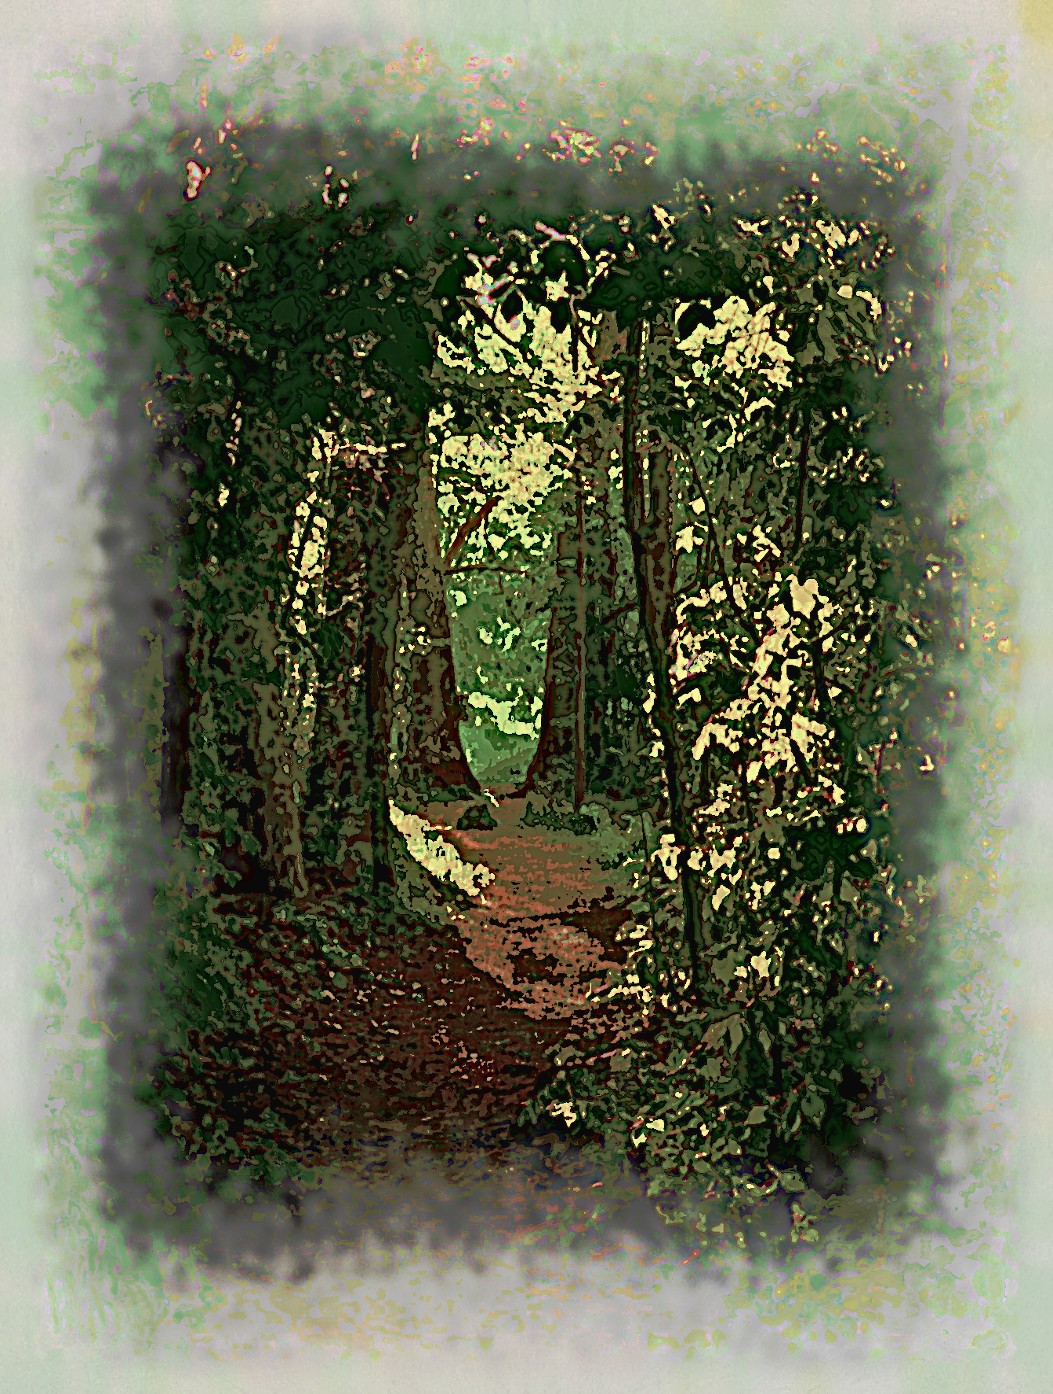 2020-05-11 09-16-25 1_km2_xlii_by_jaco353_ddwmr9h-fullview as a digital aquarel, using18 colours, source forest, look dark plus.jpg